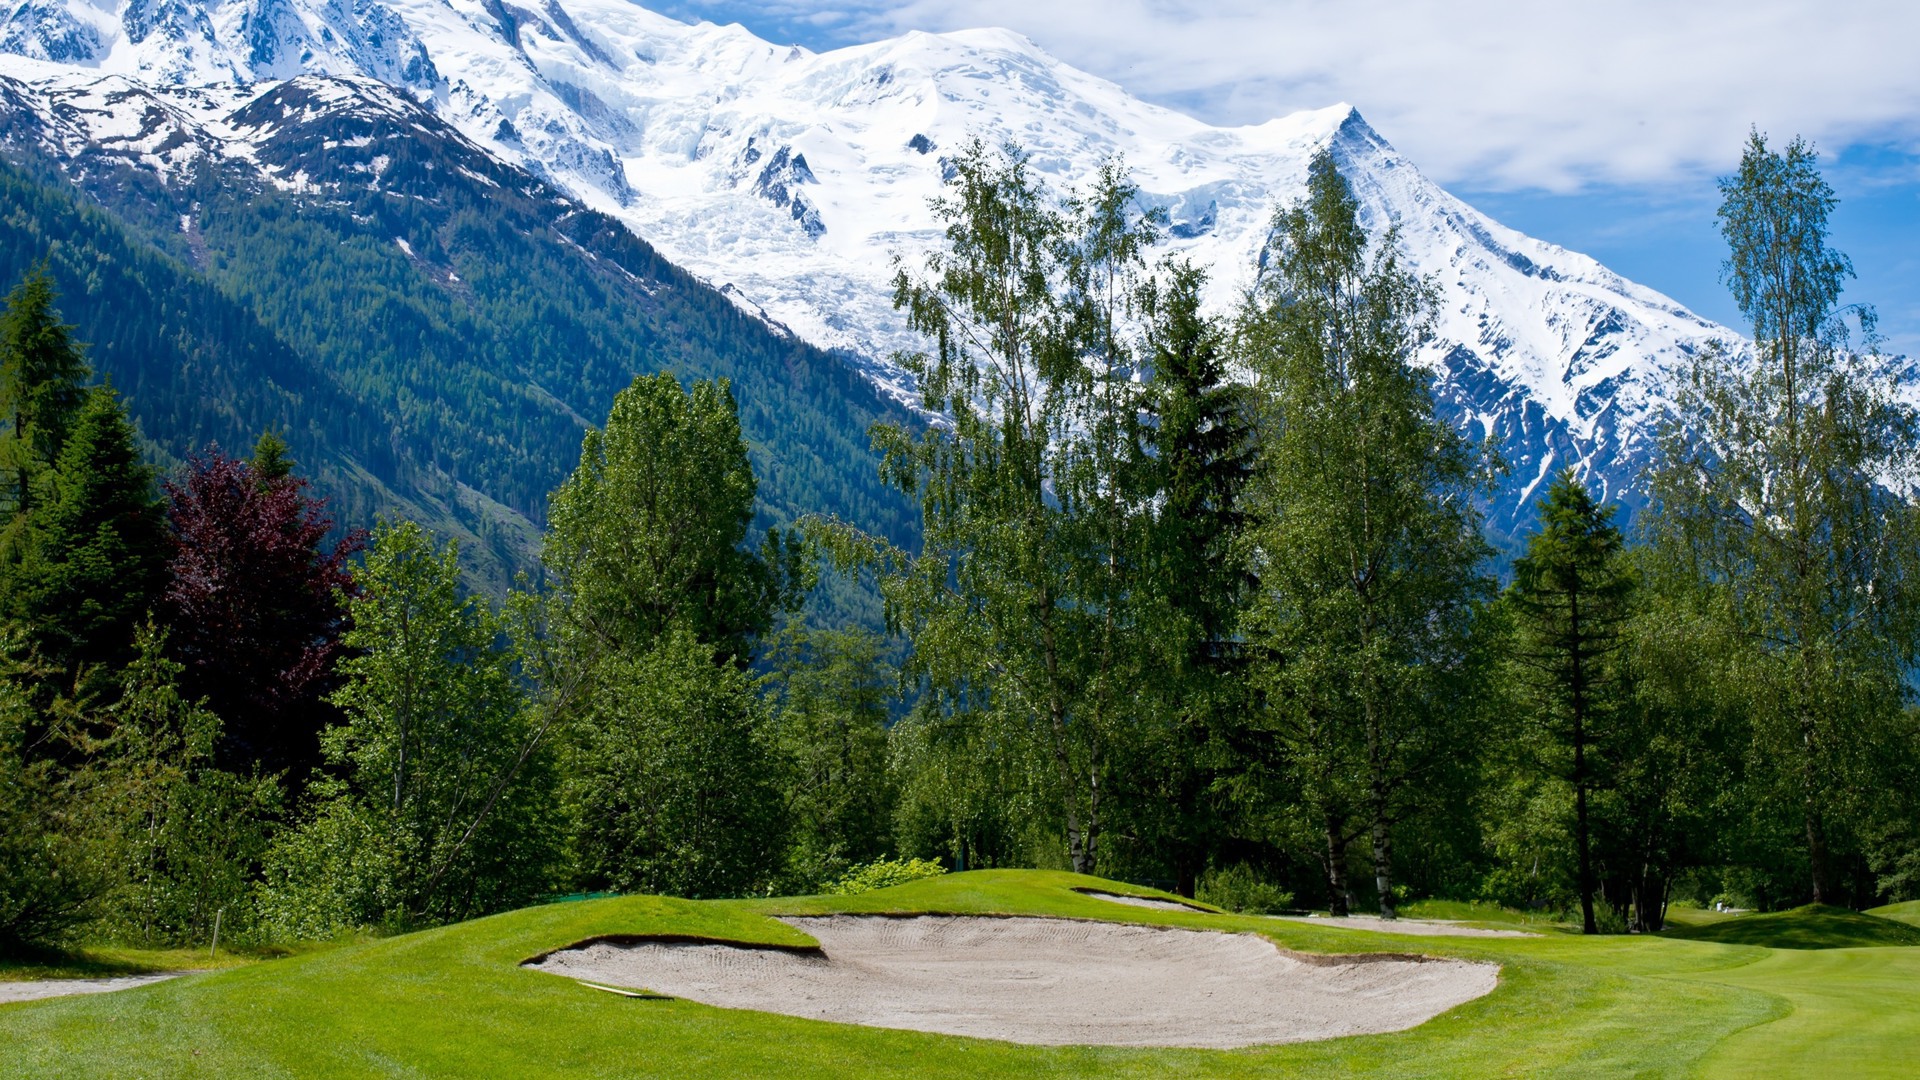 Practicar al golf en los Alpes franceses